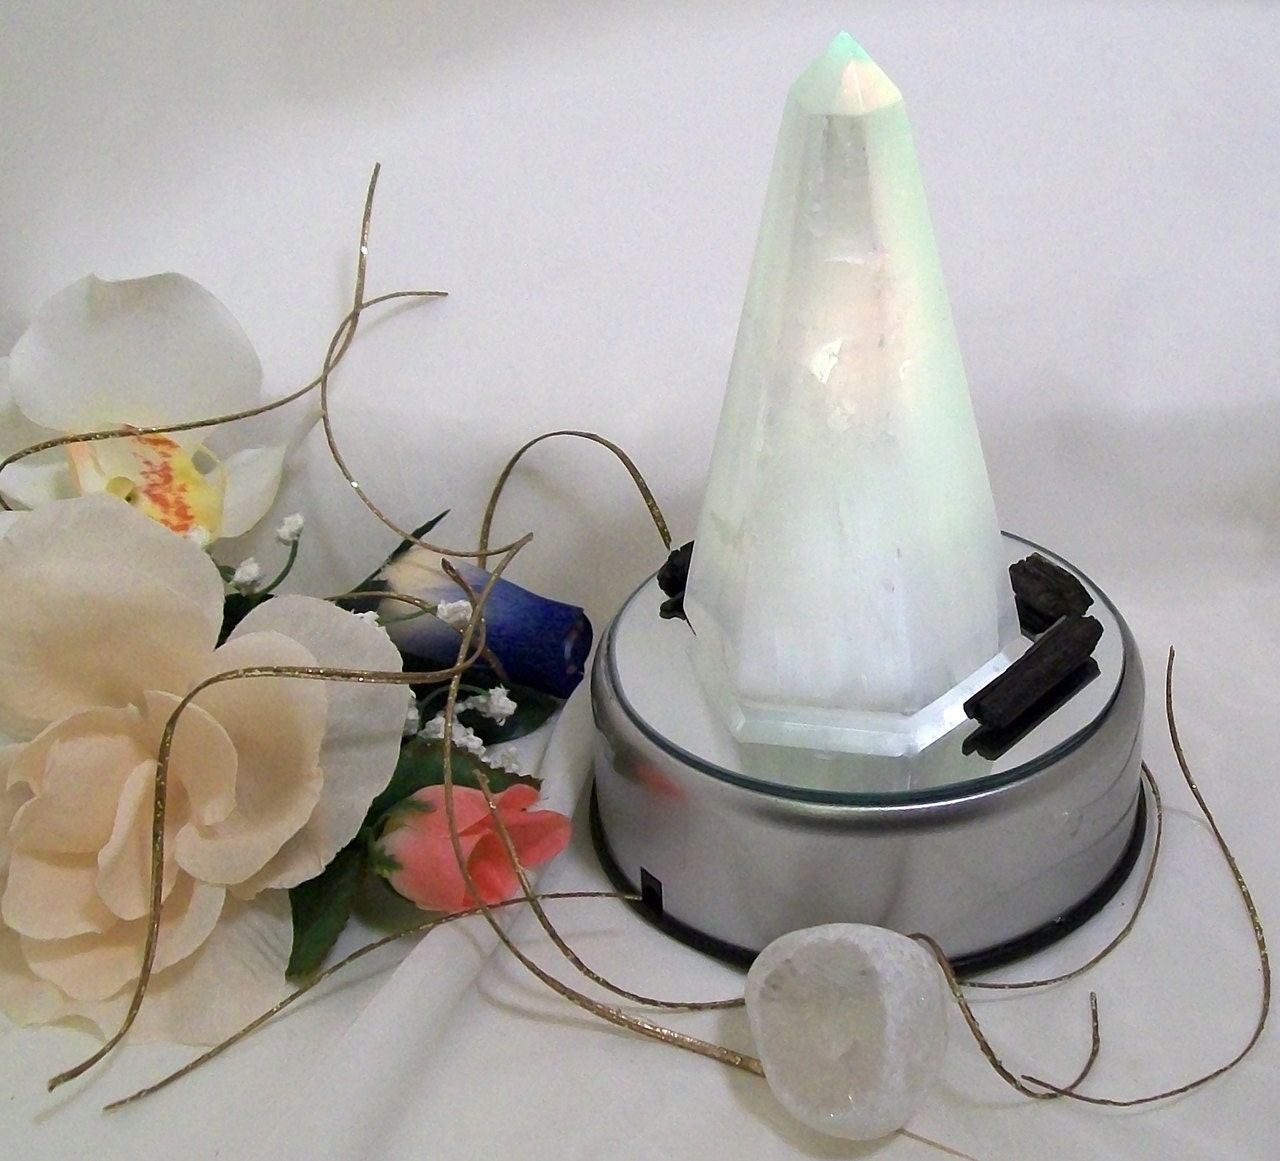 Selenite Reiki Healing Crystal Kit with LED Display